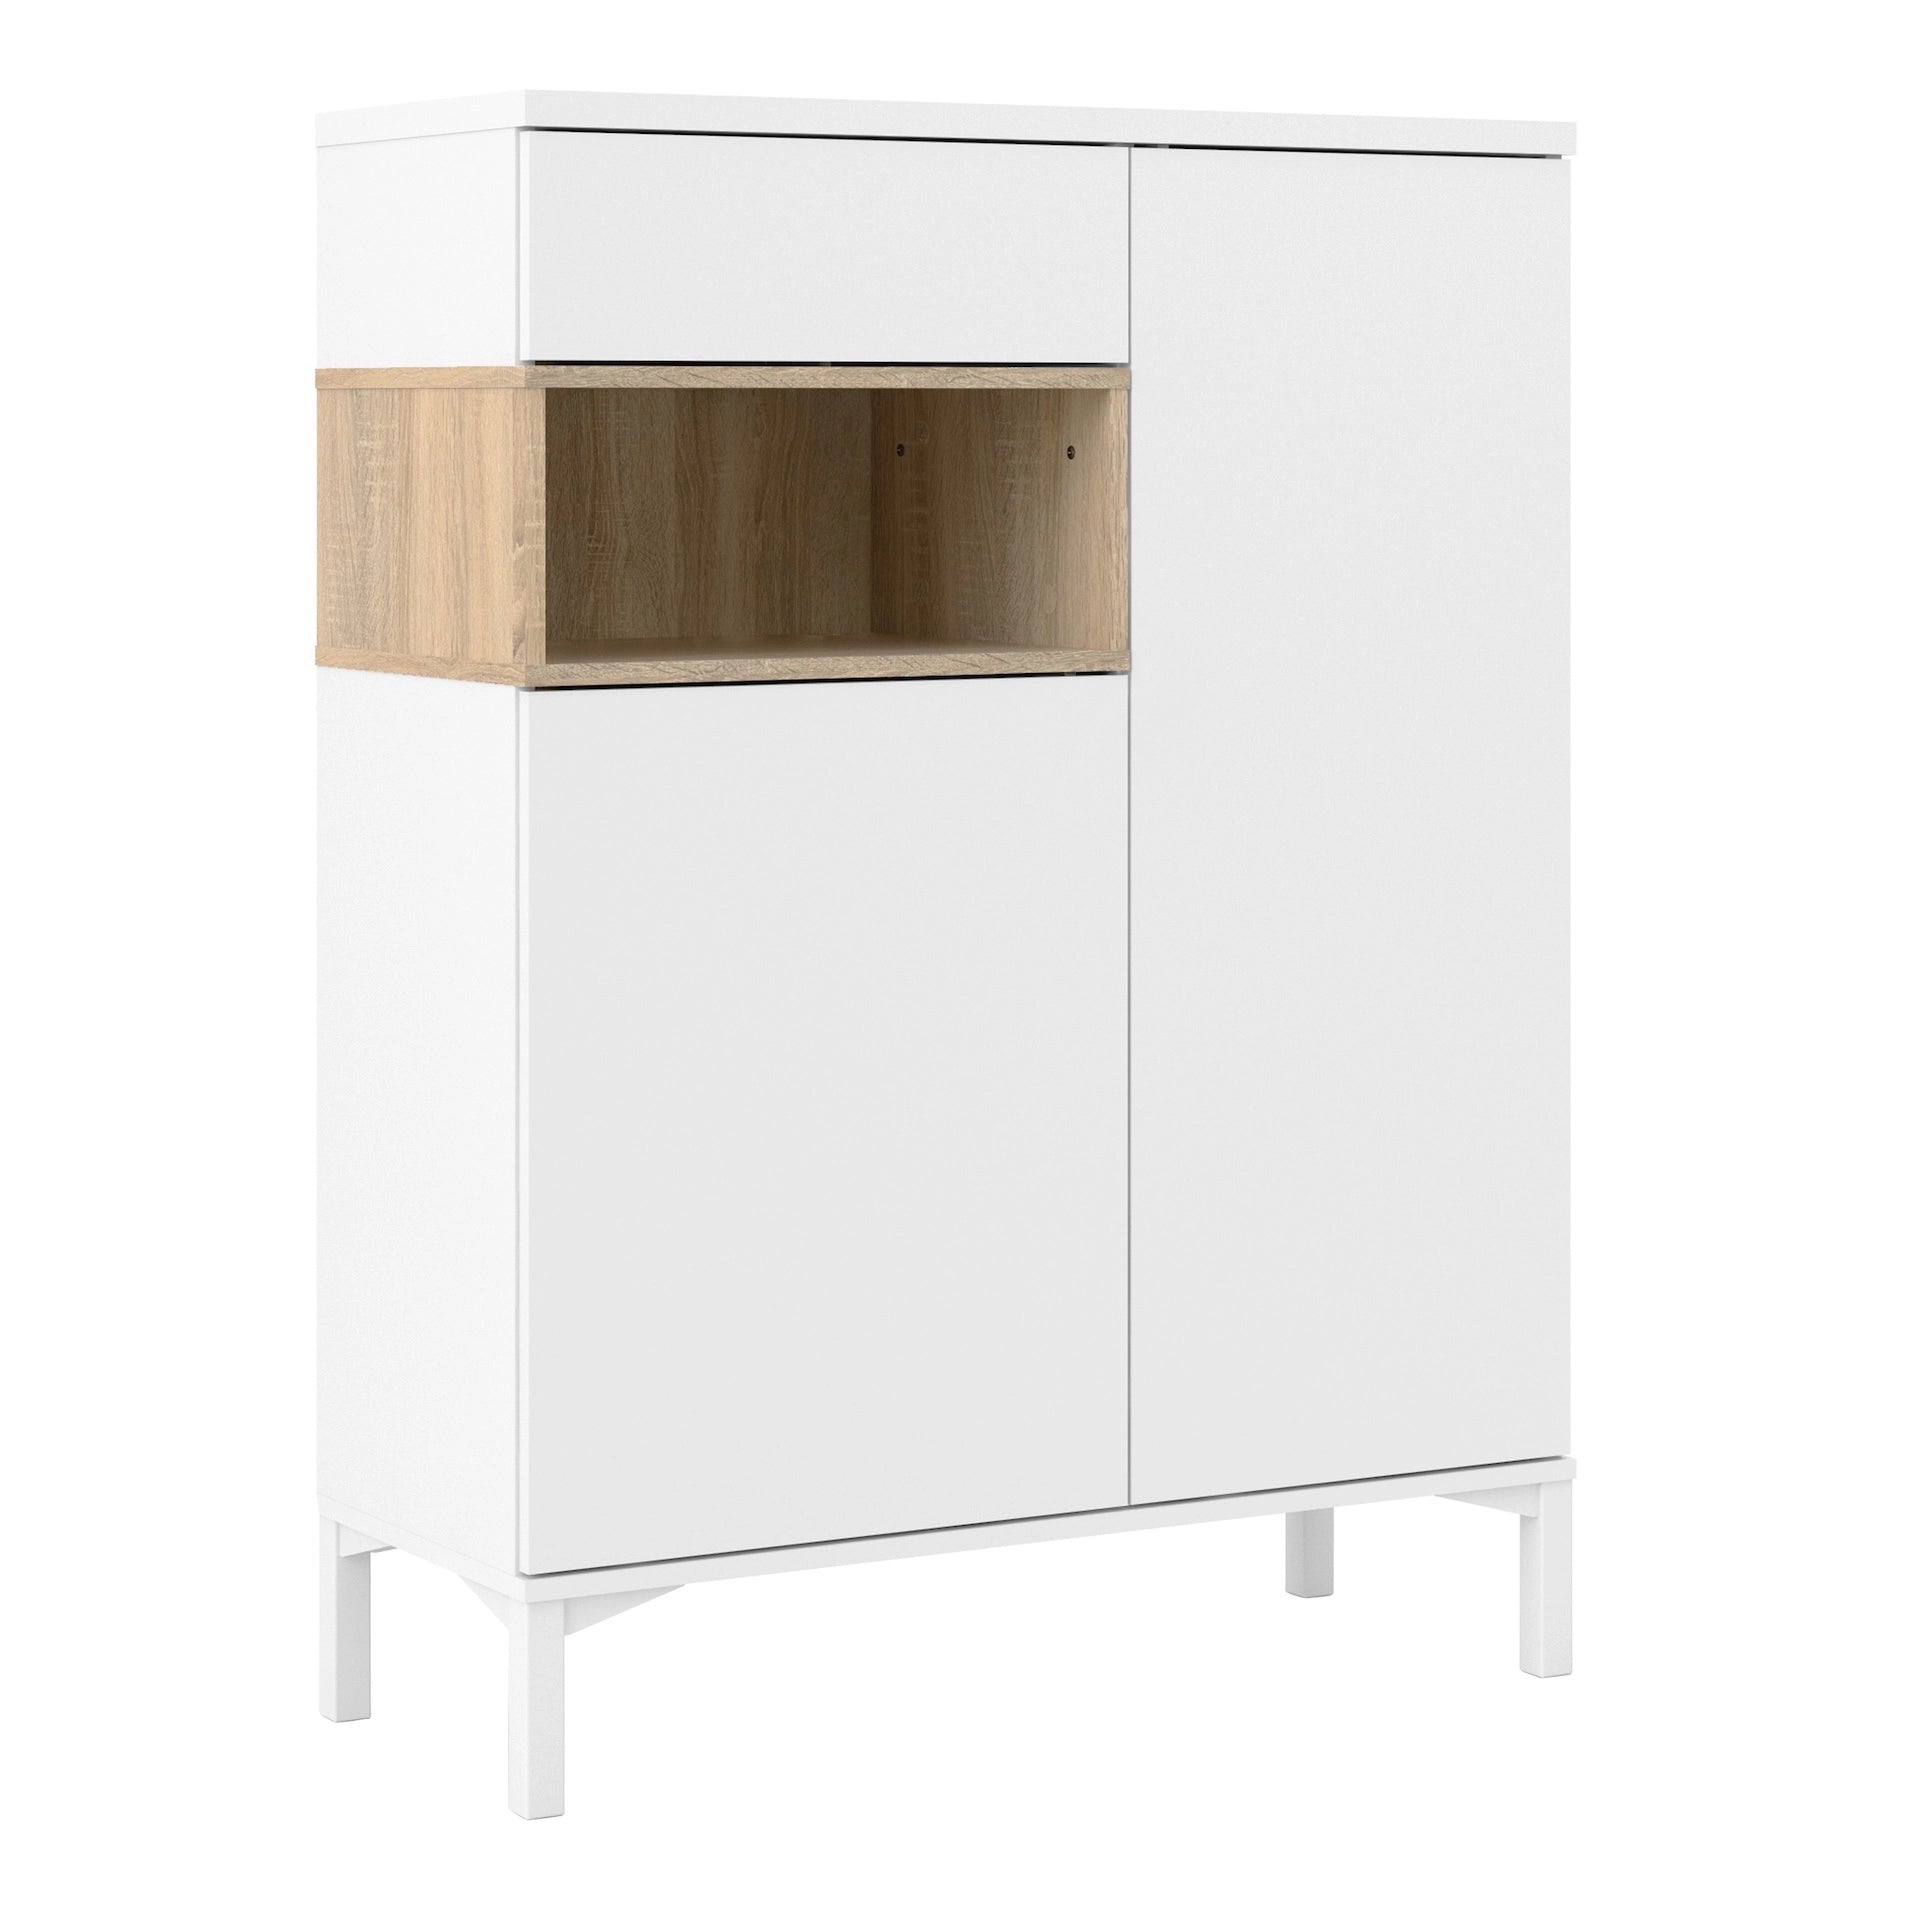 Furniture To Go Sideboard 2 Drawers 1 Door in White & Oak